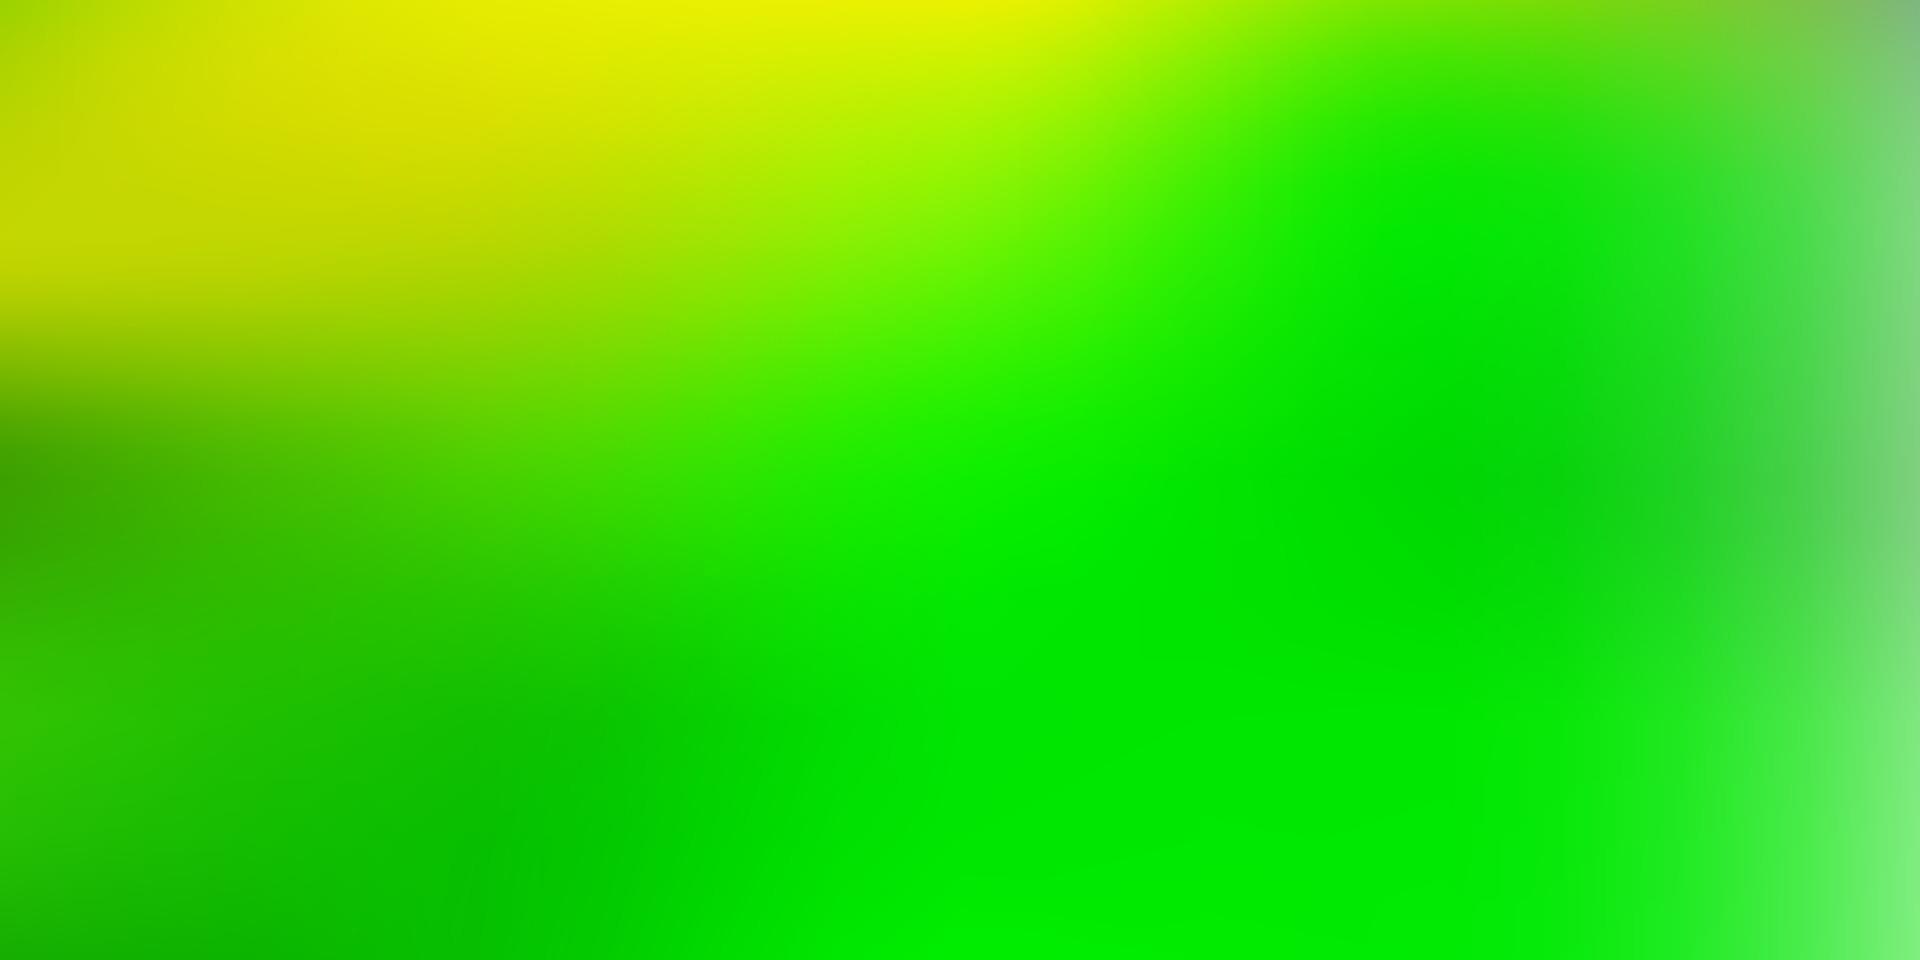 Light green, yellow vector blurred texture.